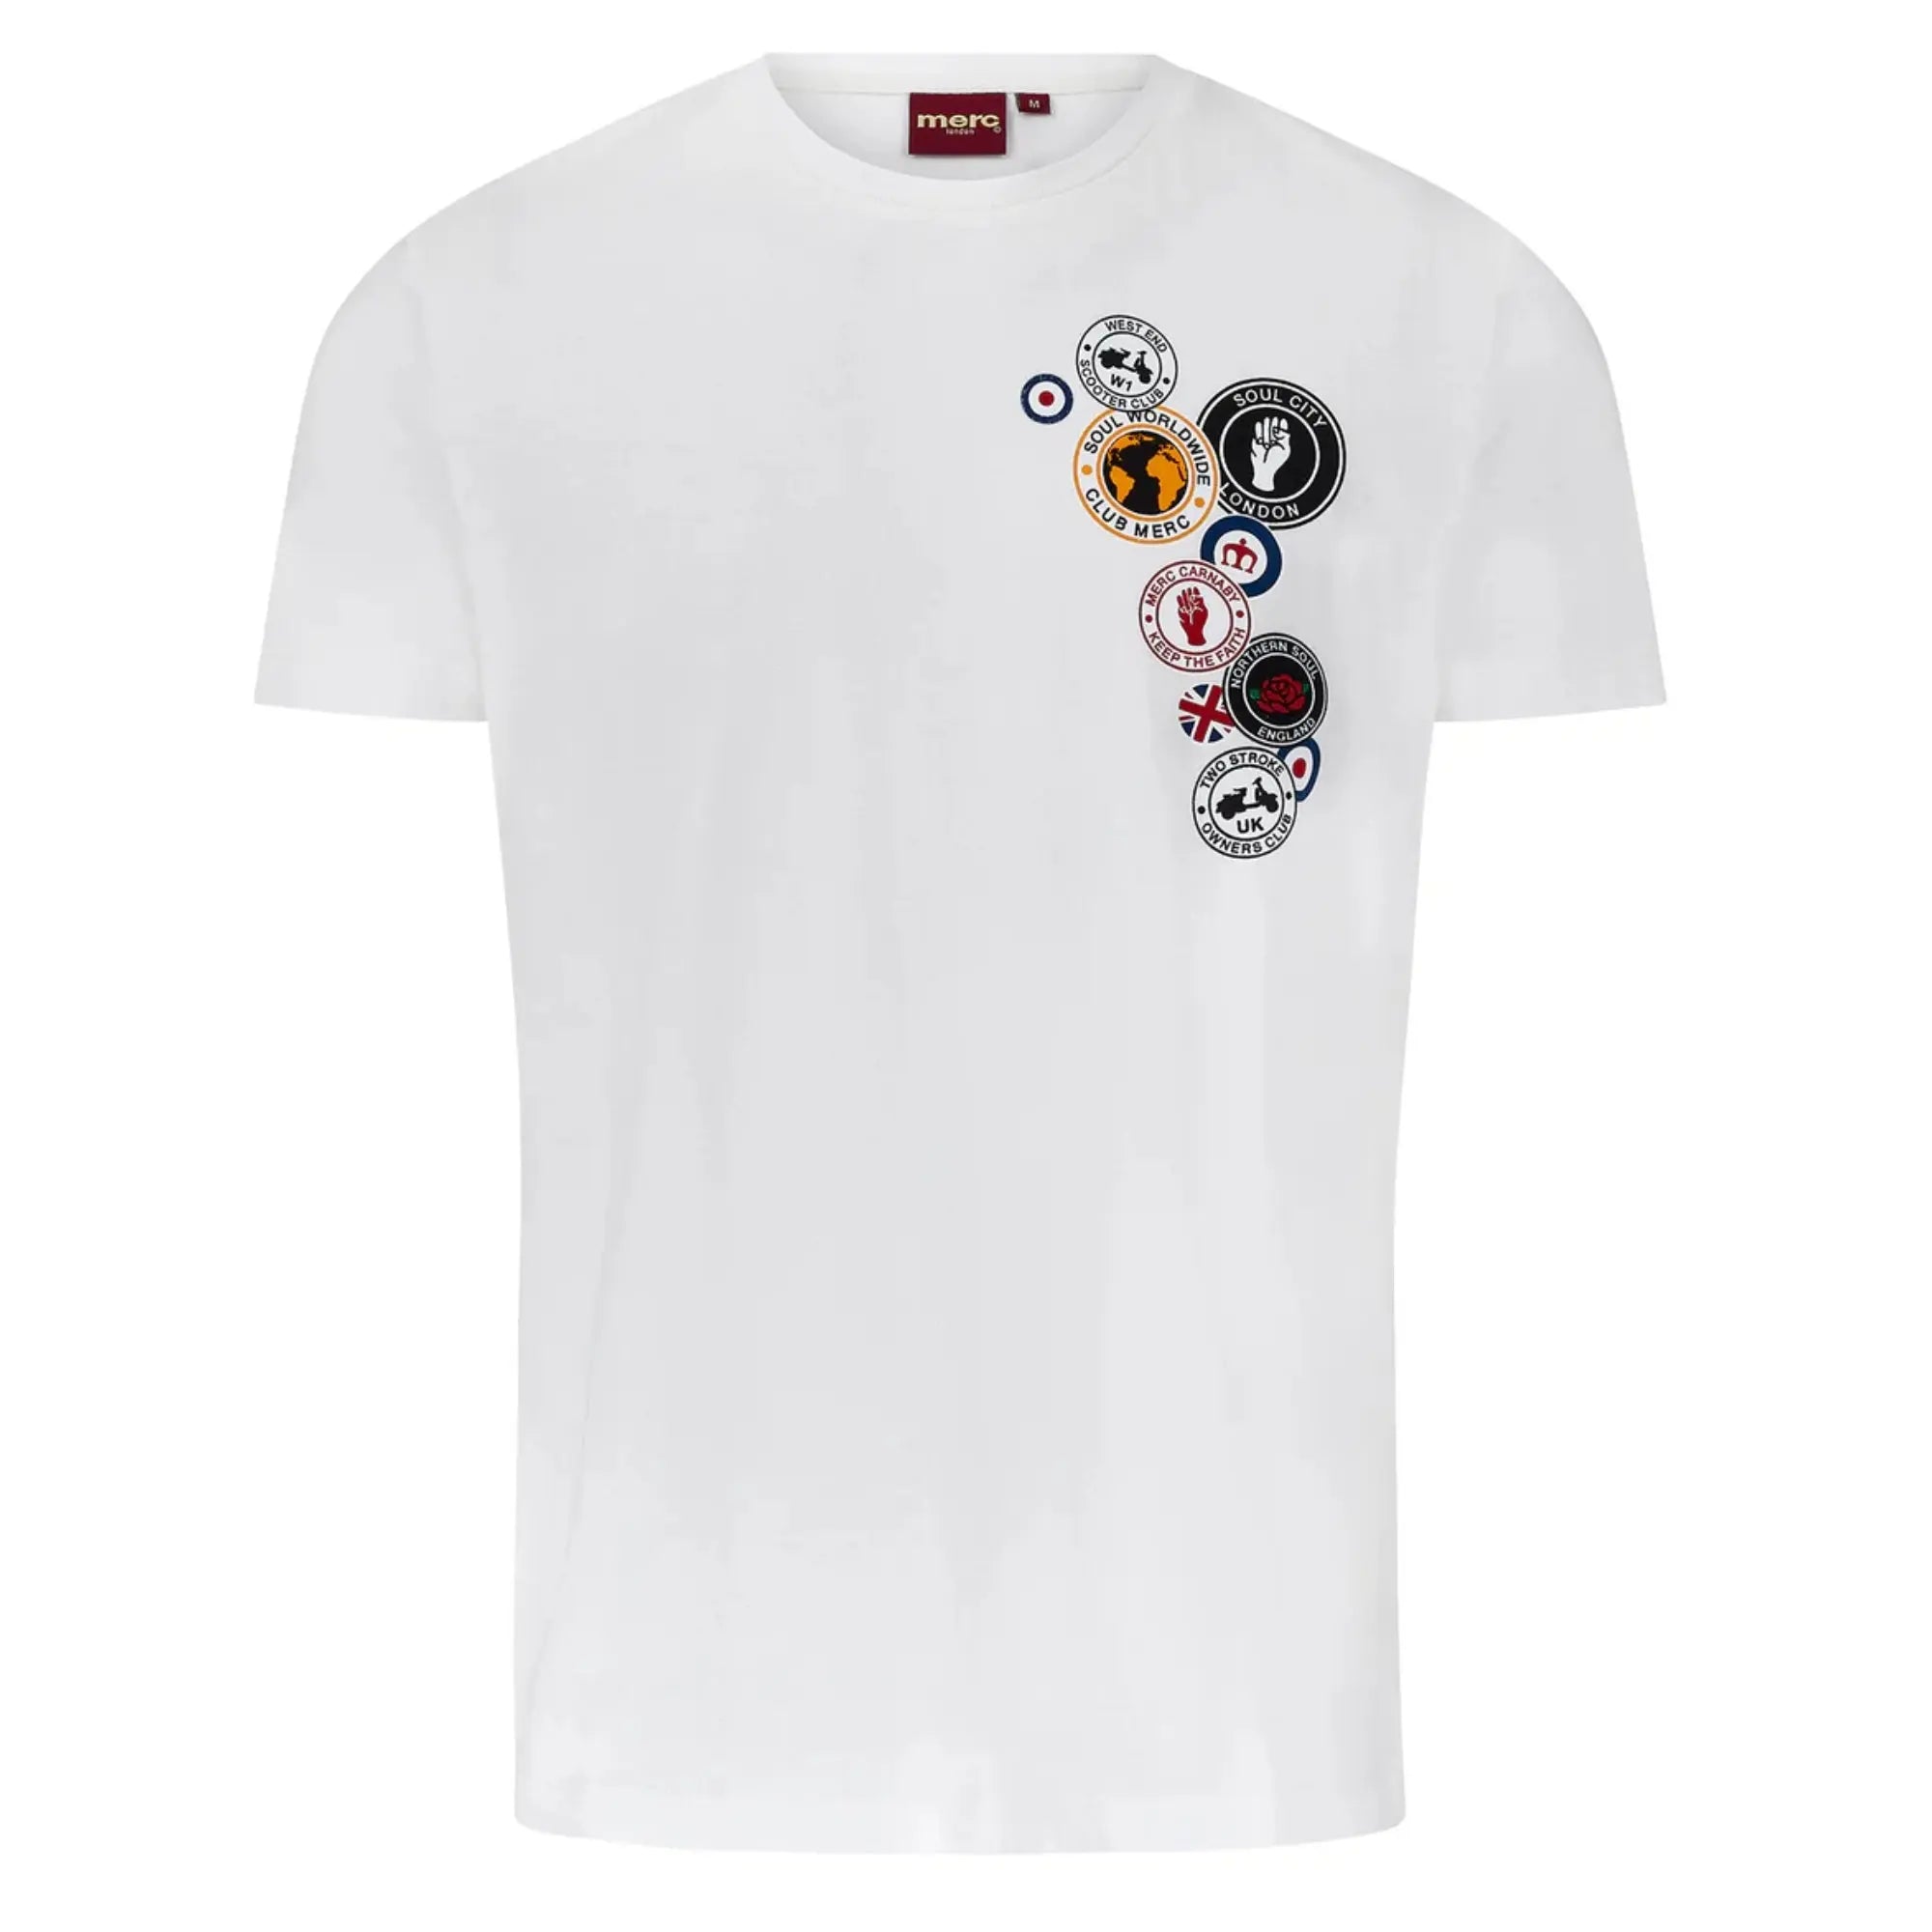 Merc London Naunton Pin Badge T-shirt - White